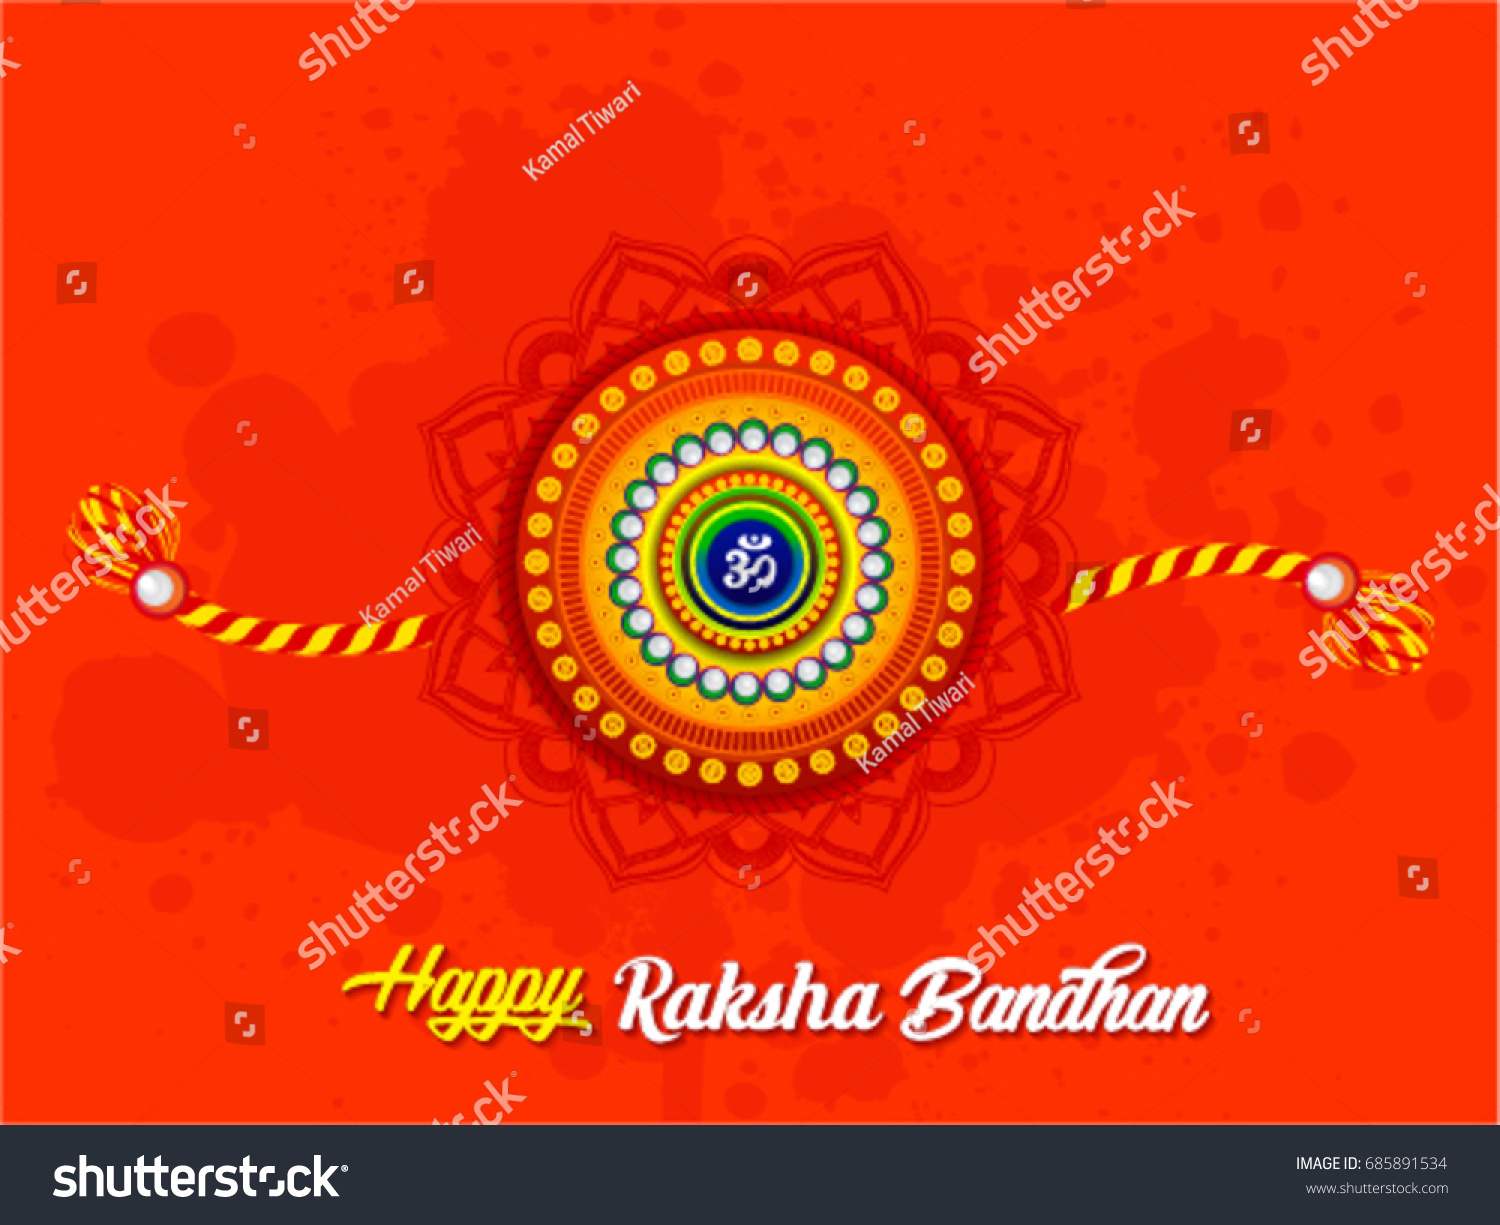 SVG of Happy Raksha Bandhan, Beautiful colorful with red background Rakhi designs, Hindu Festival, Vector Illustration. svg